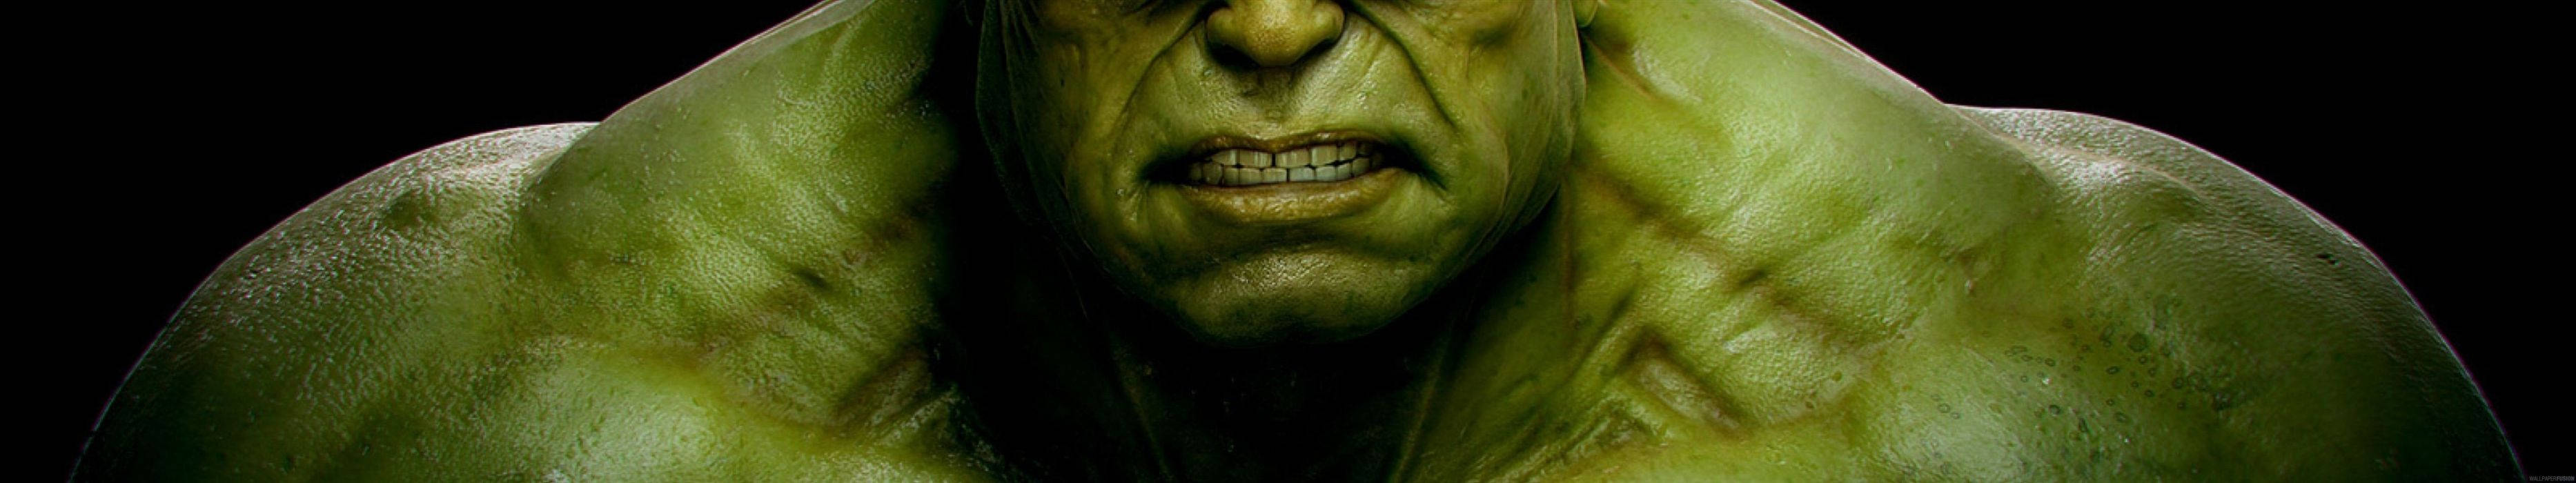 Triple Monitor Hulk Wallpaper